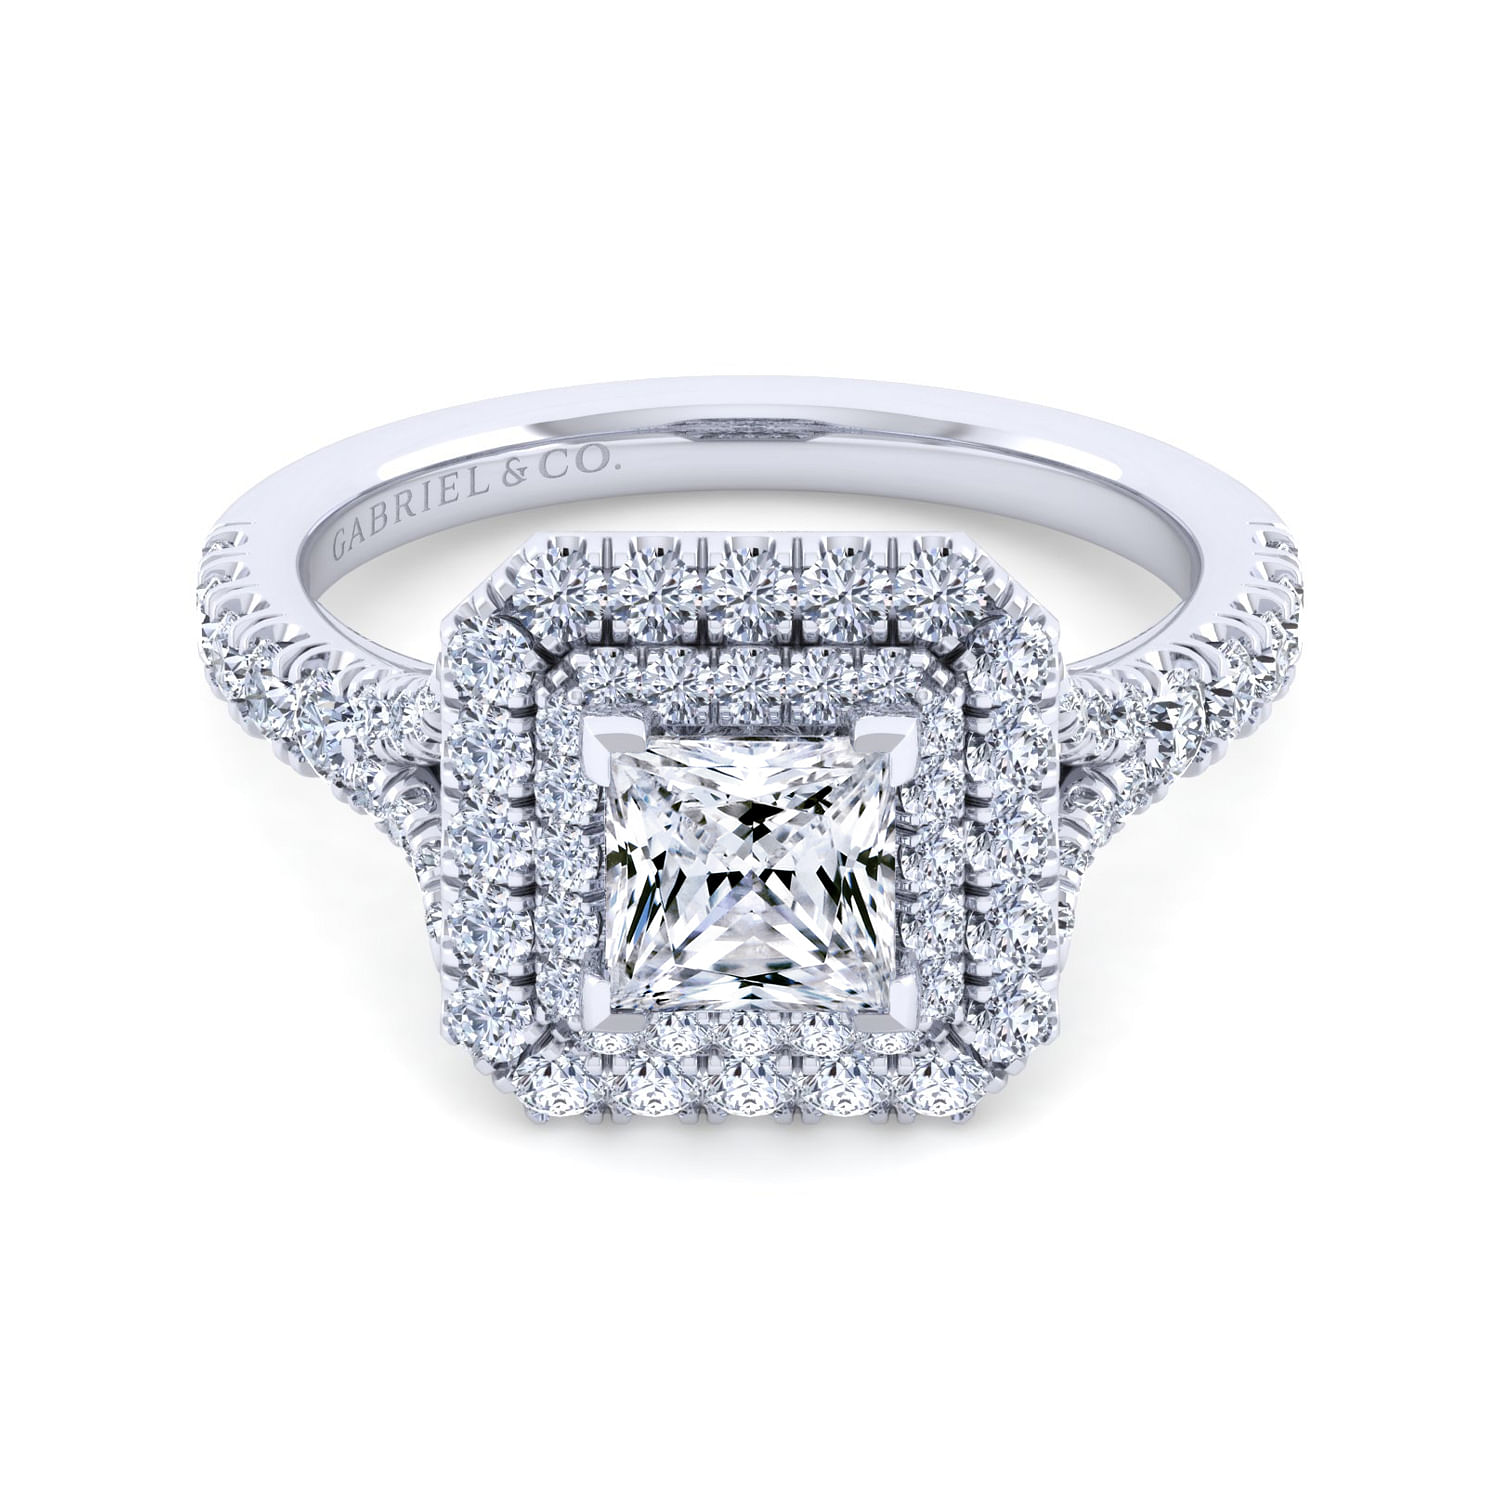 Sequoia - 14K White Gold Princess Double Halo Diamond Engagement Ring